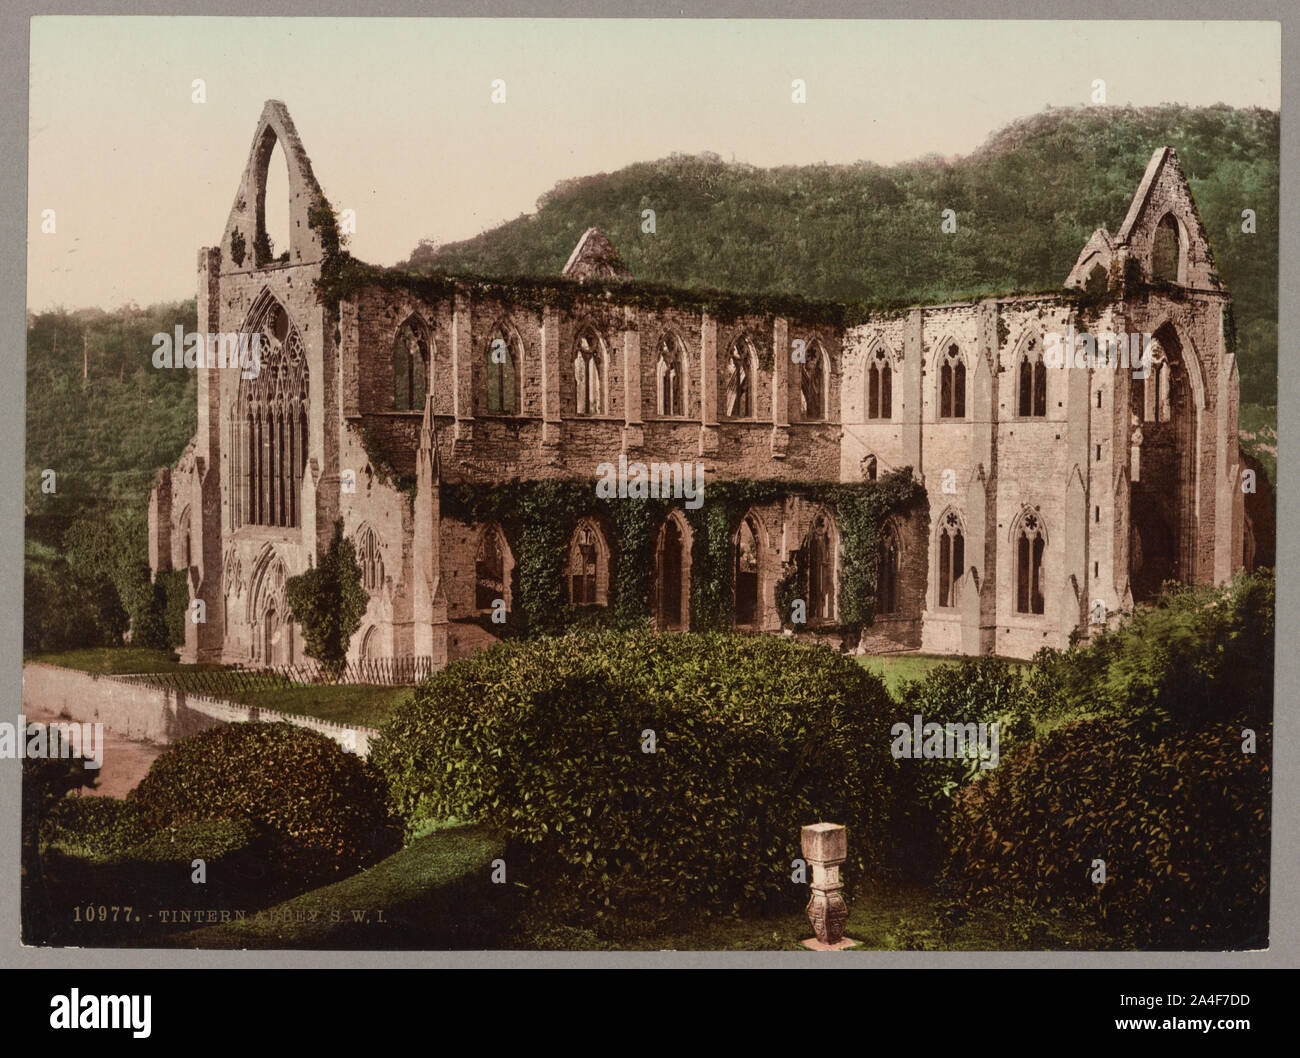 Tintern Abbey. S.W. I. Stock Photo